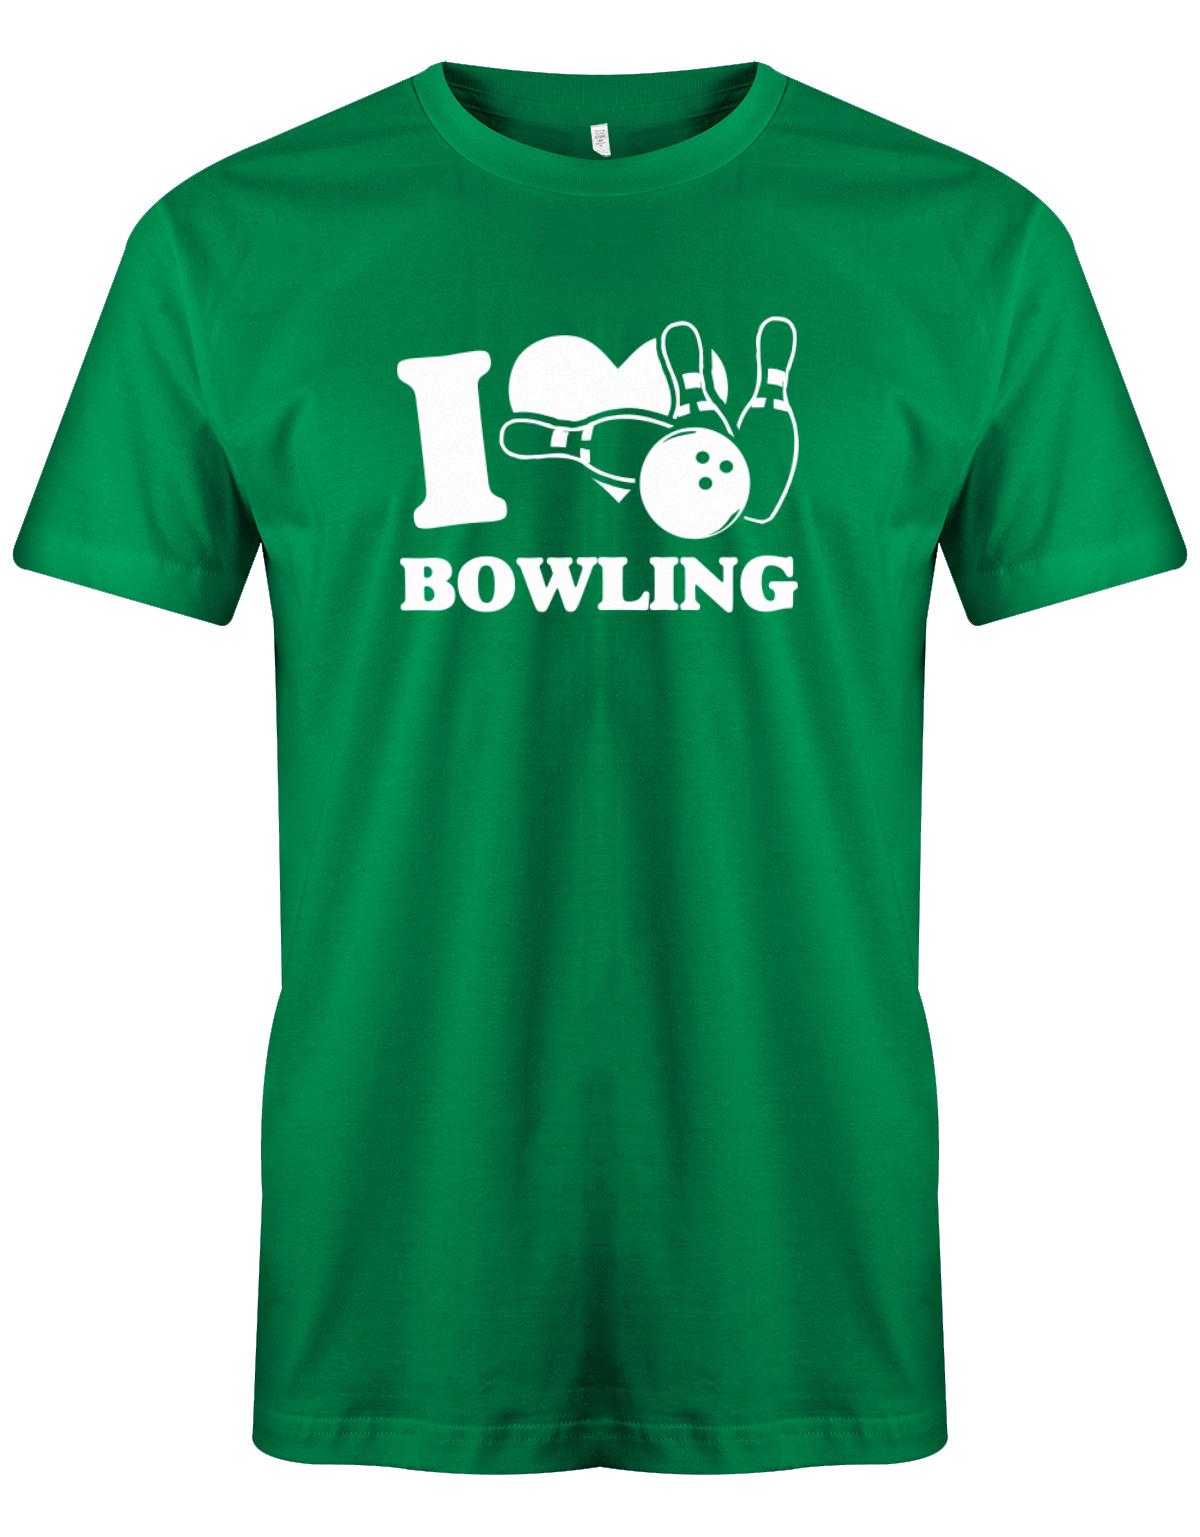 I-LOve-Bowling-Herren-Shirt-Gr-n